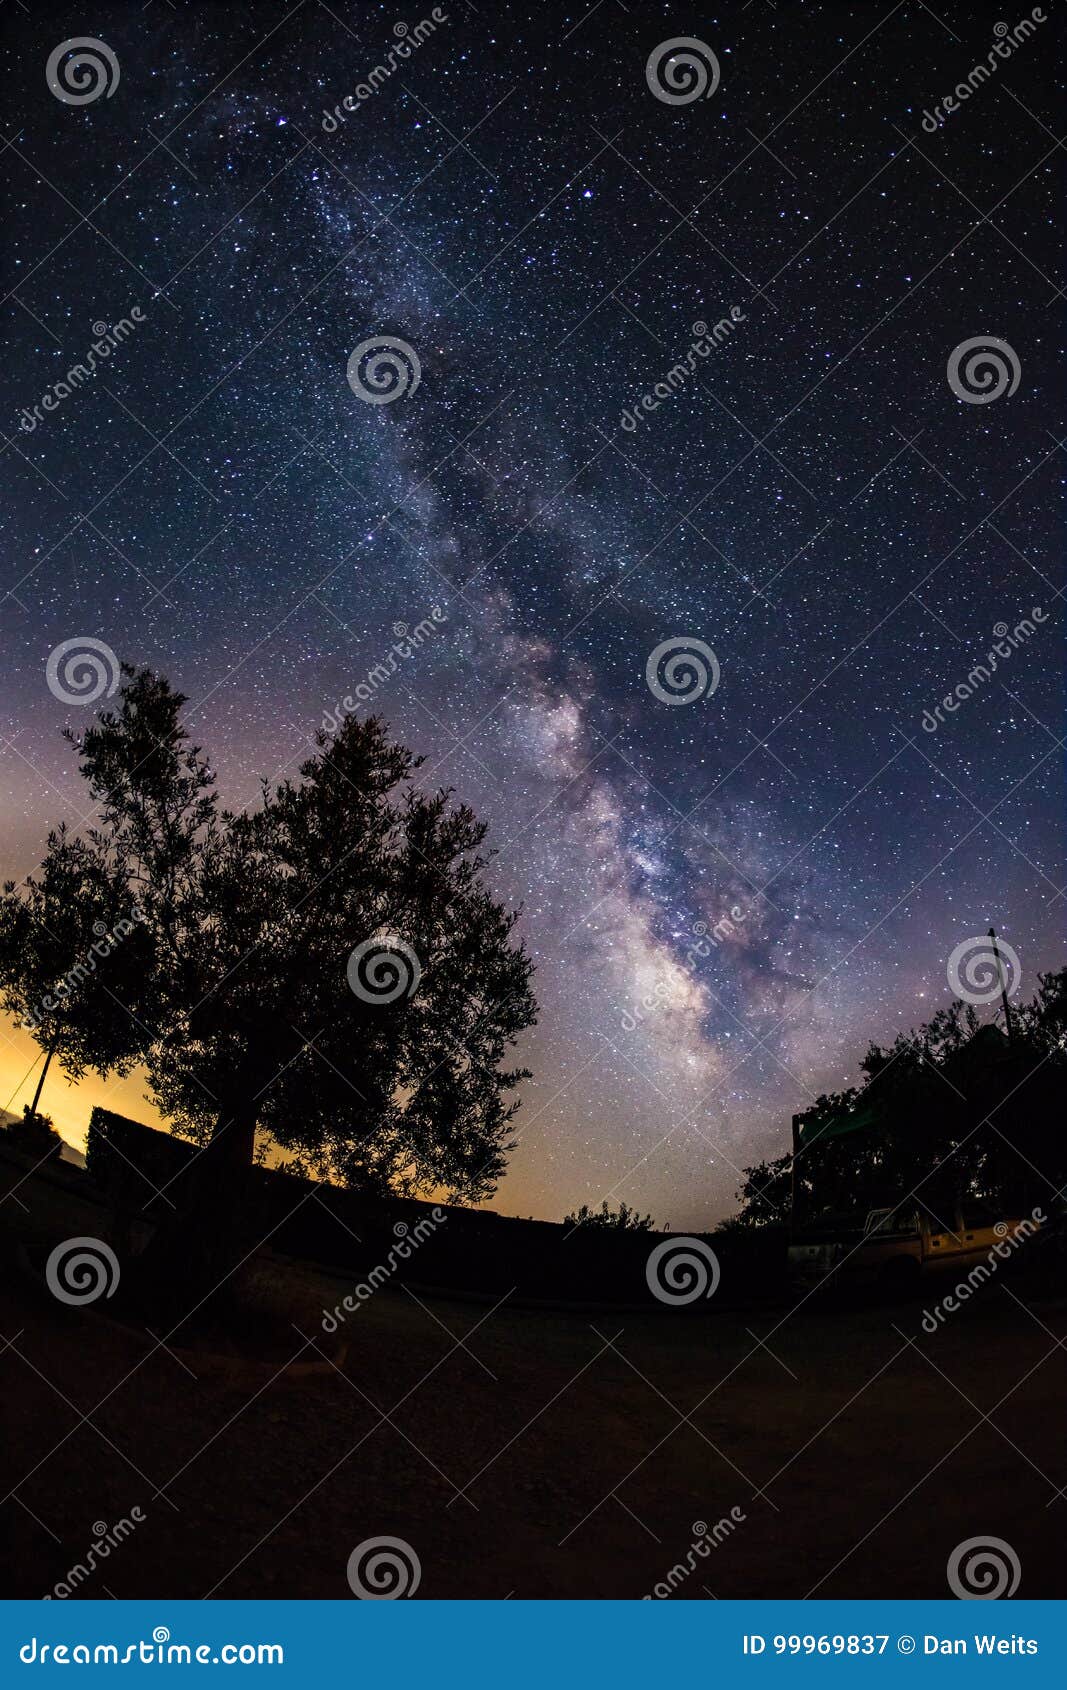 Milky Way in Bloom Over the Night Sky in Sierra Nevada, Spain Stock Image  Image of range, south: 99969837